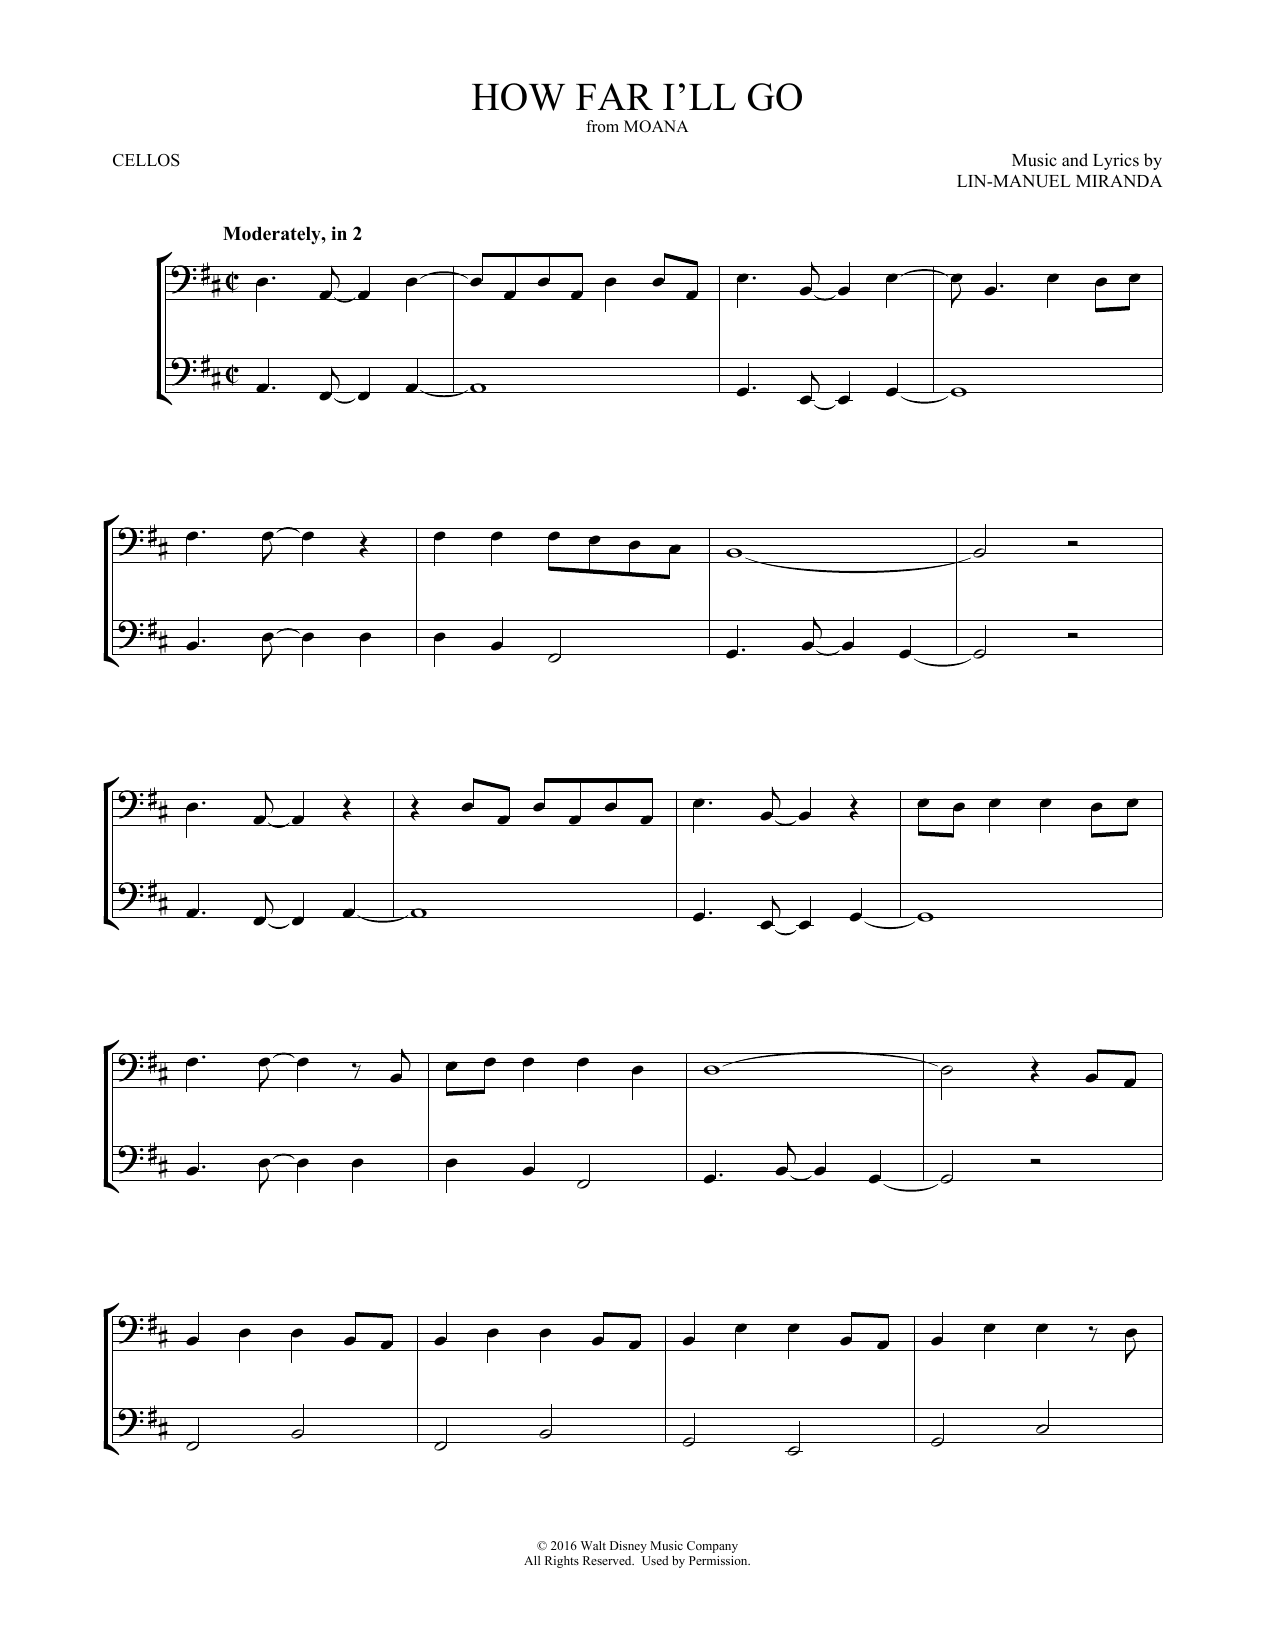 Lin-Manuel Miranda How Far I'll Go (from Moana) Sheet Music Notes & Chords for Violin Duet - Download or Print PDF